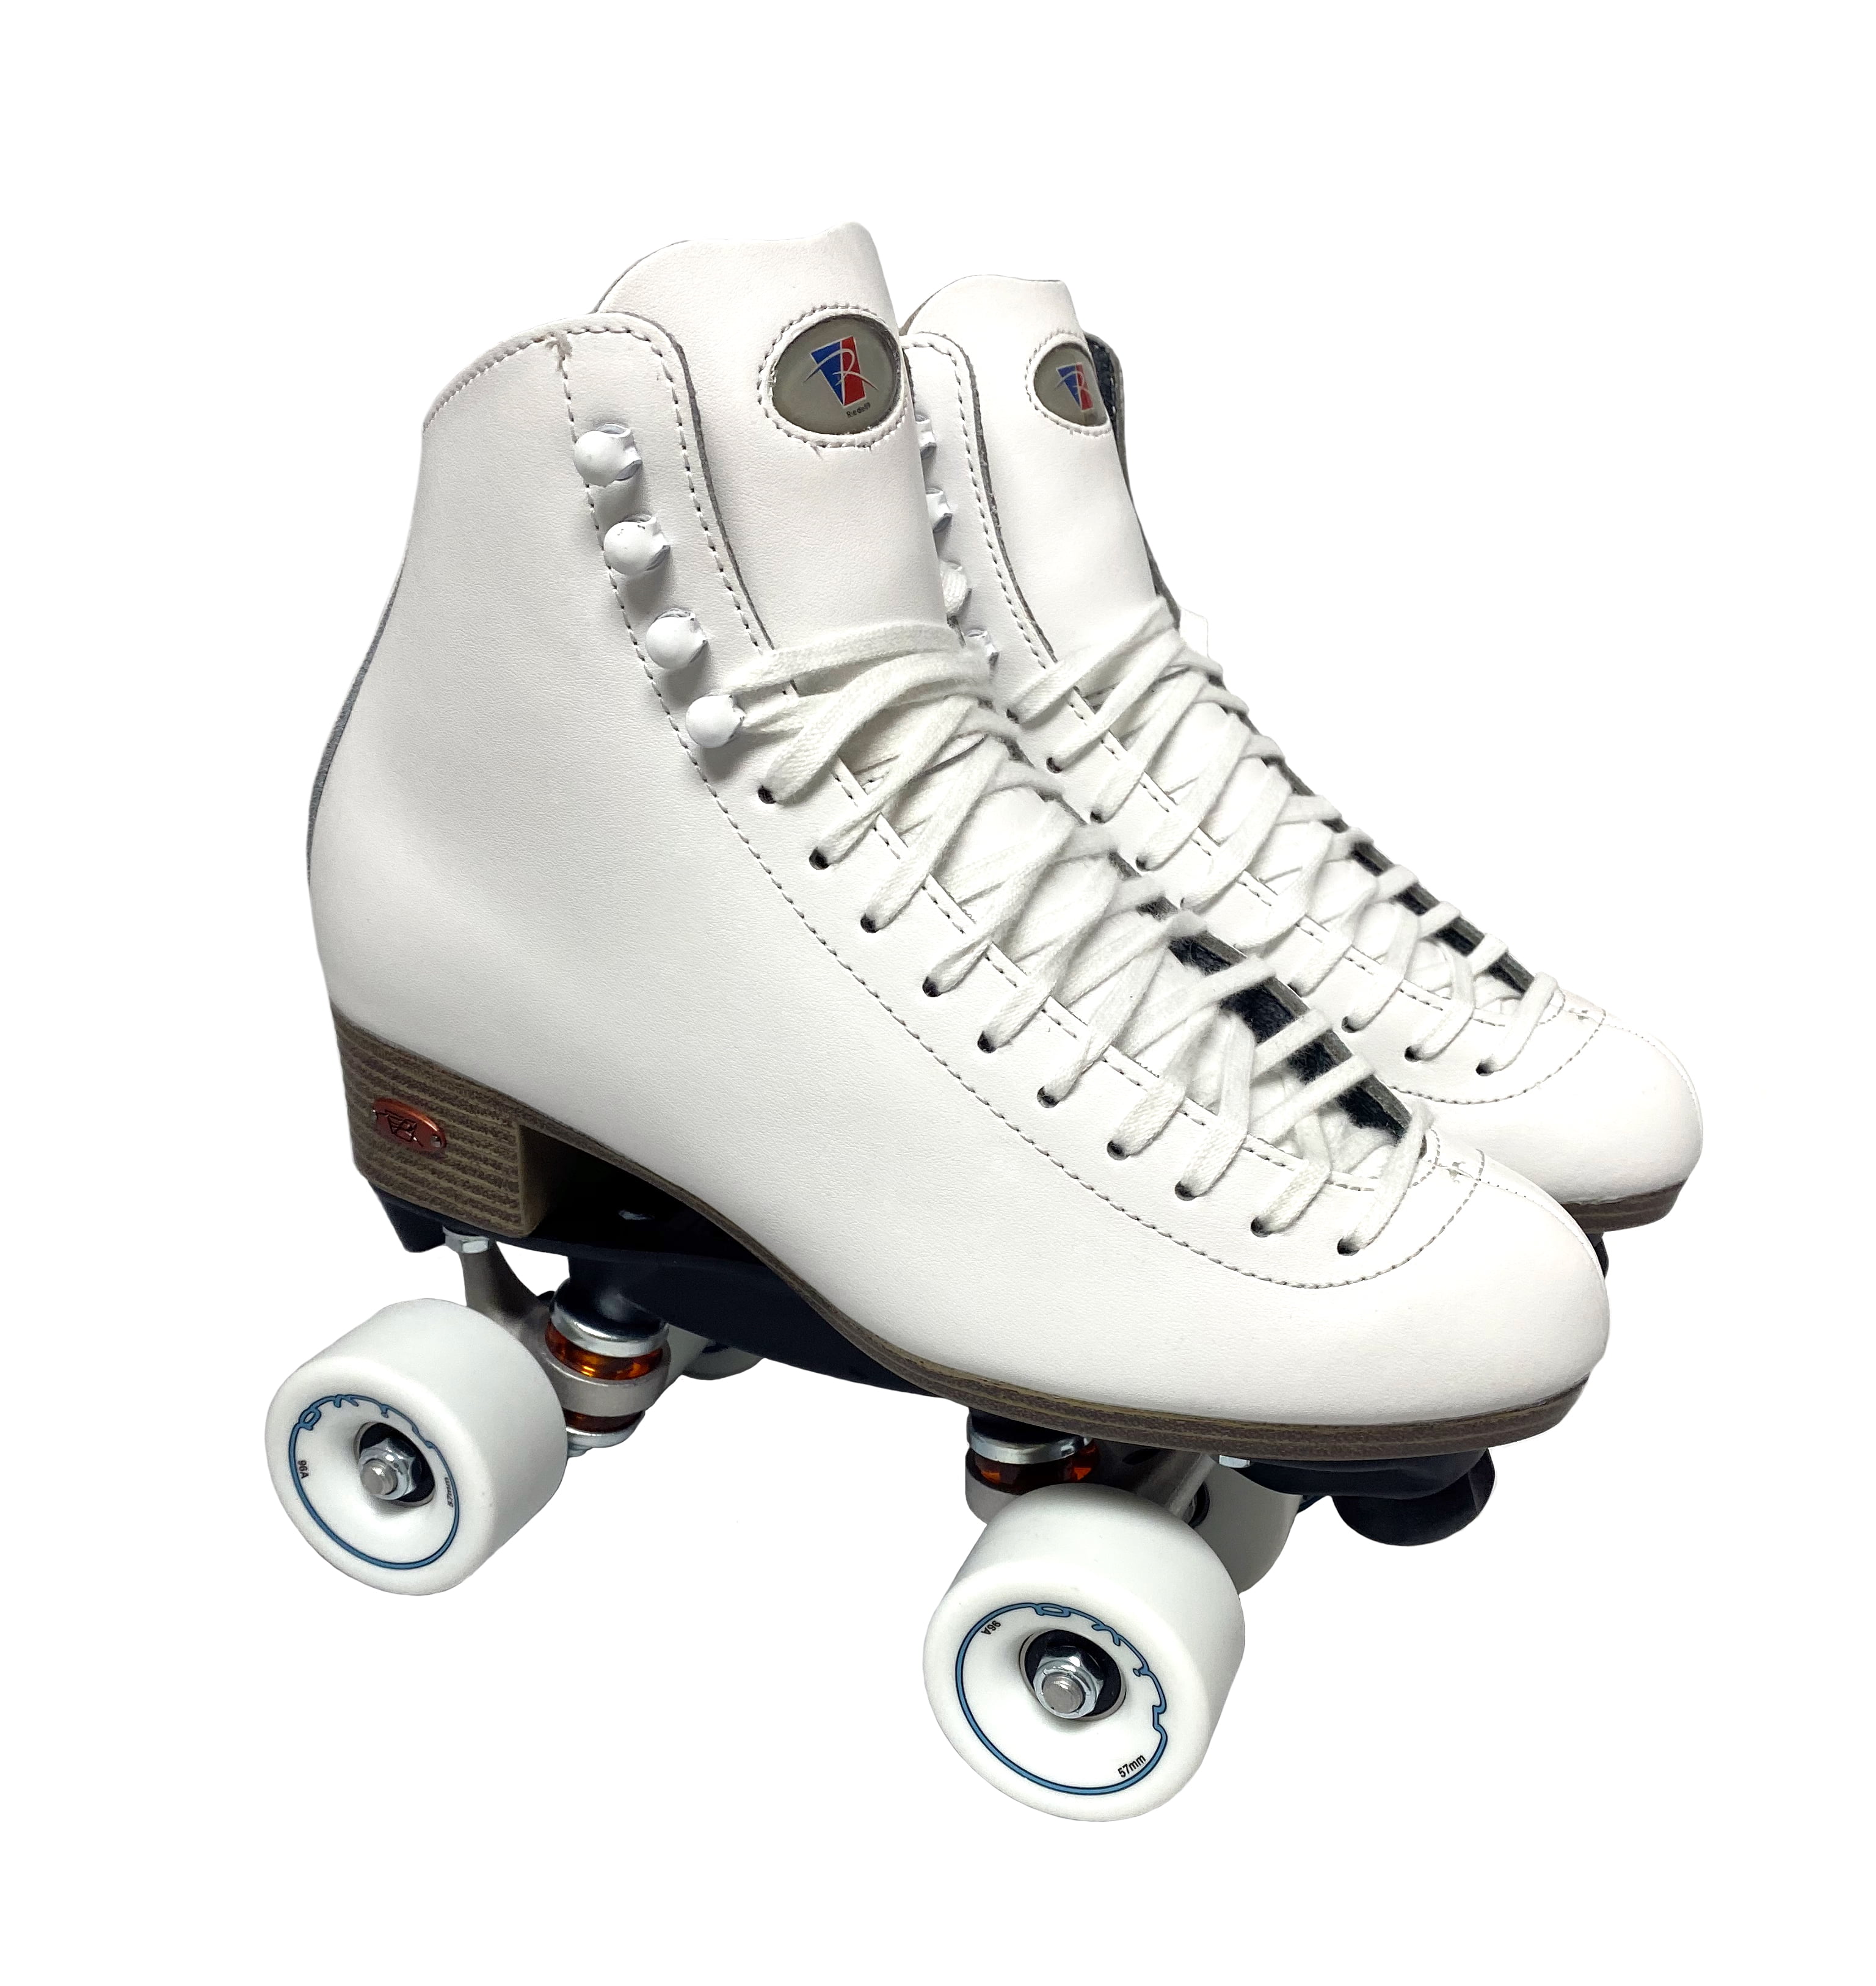 White 111 Boost Riedell Quad Roller Skates 